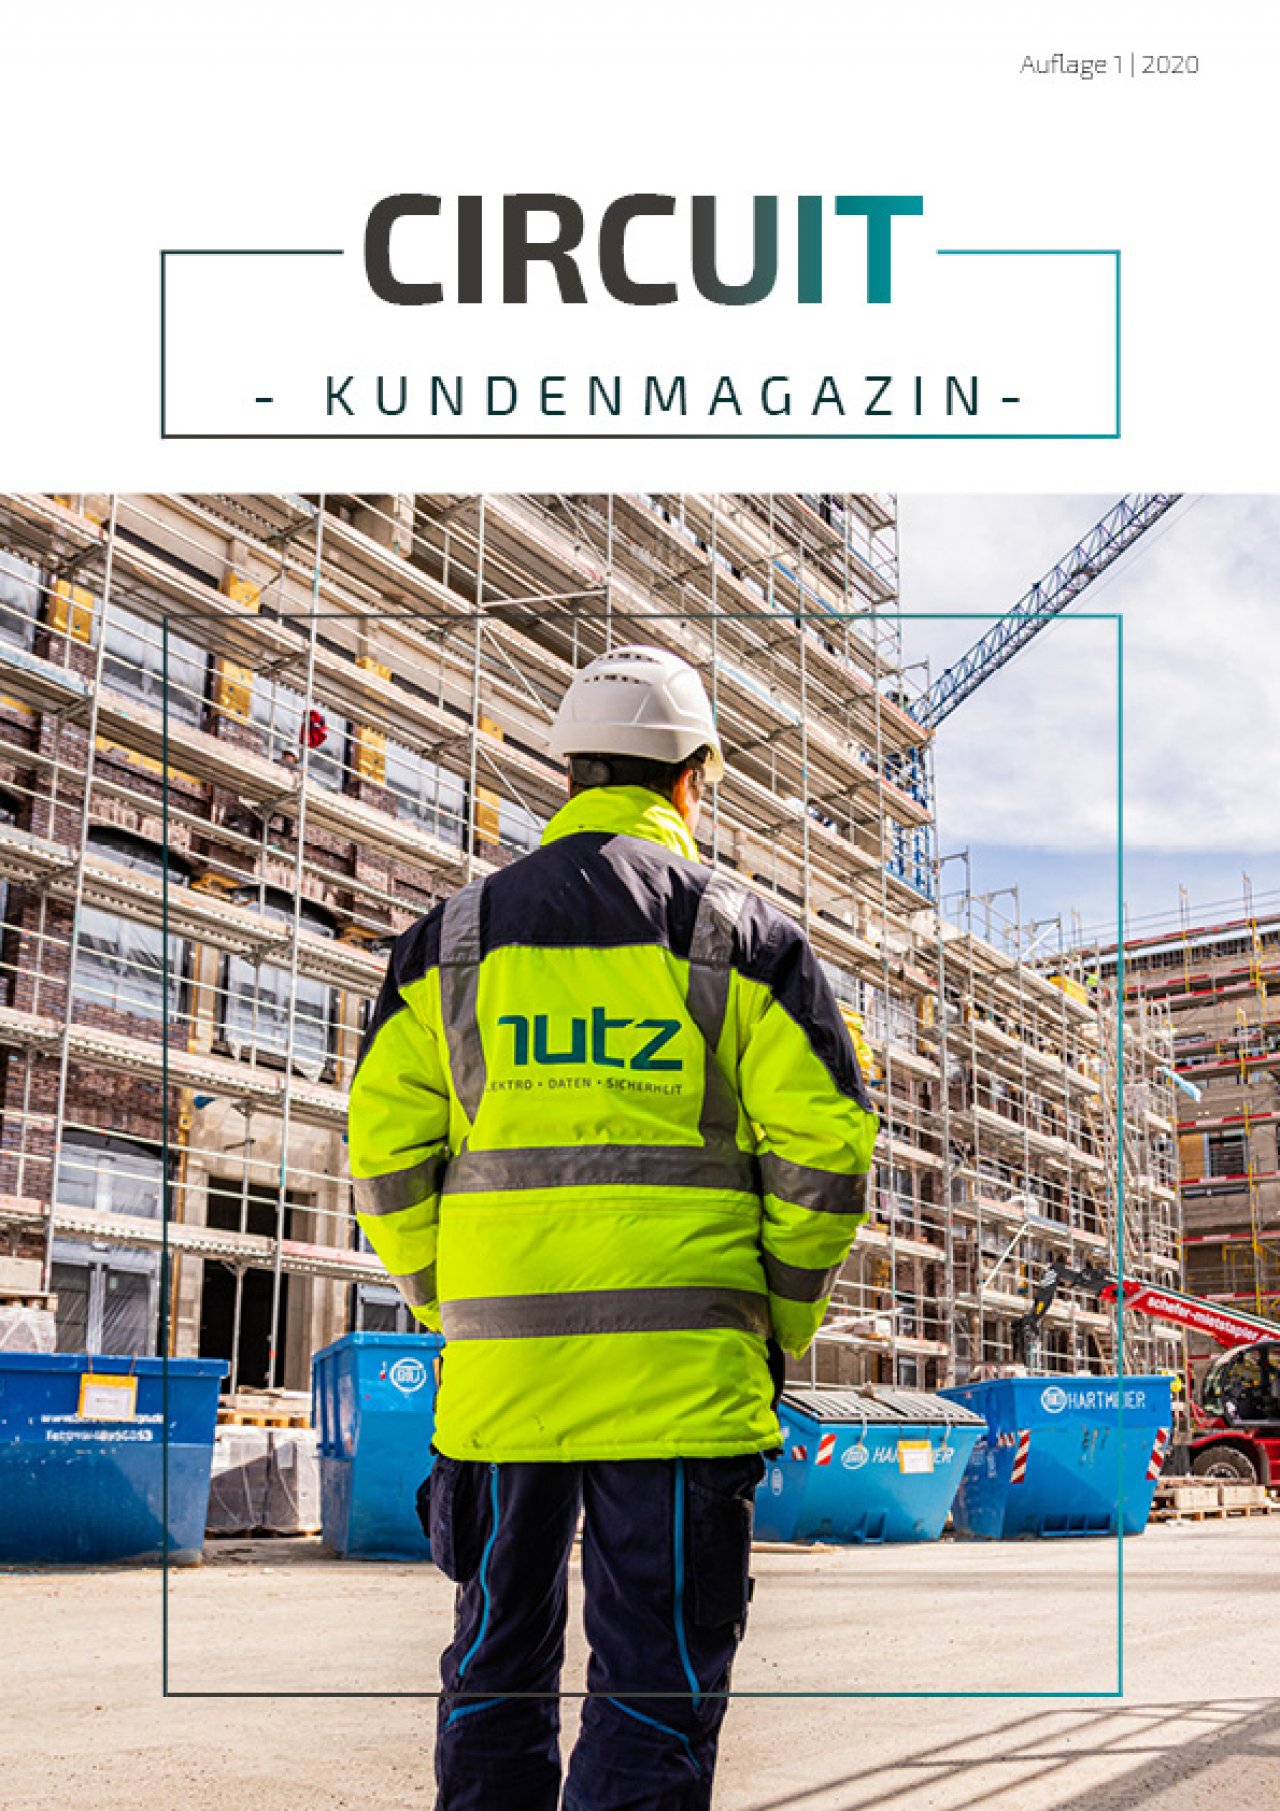 Kundenmagazin CIRCUIT 2020 - Nutz GmbH